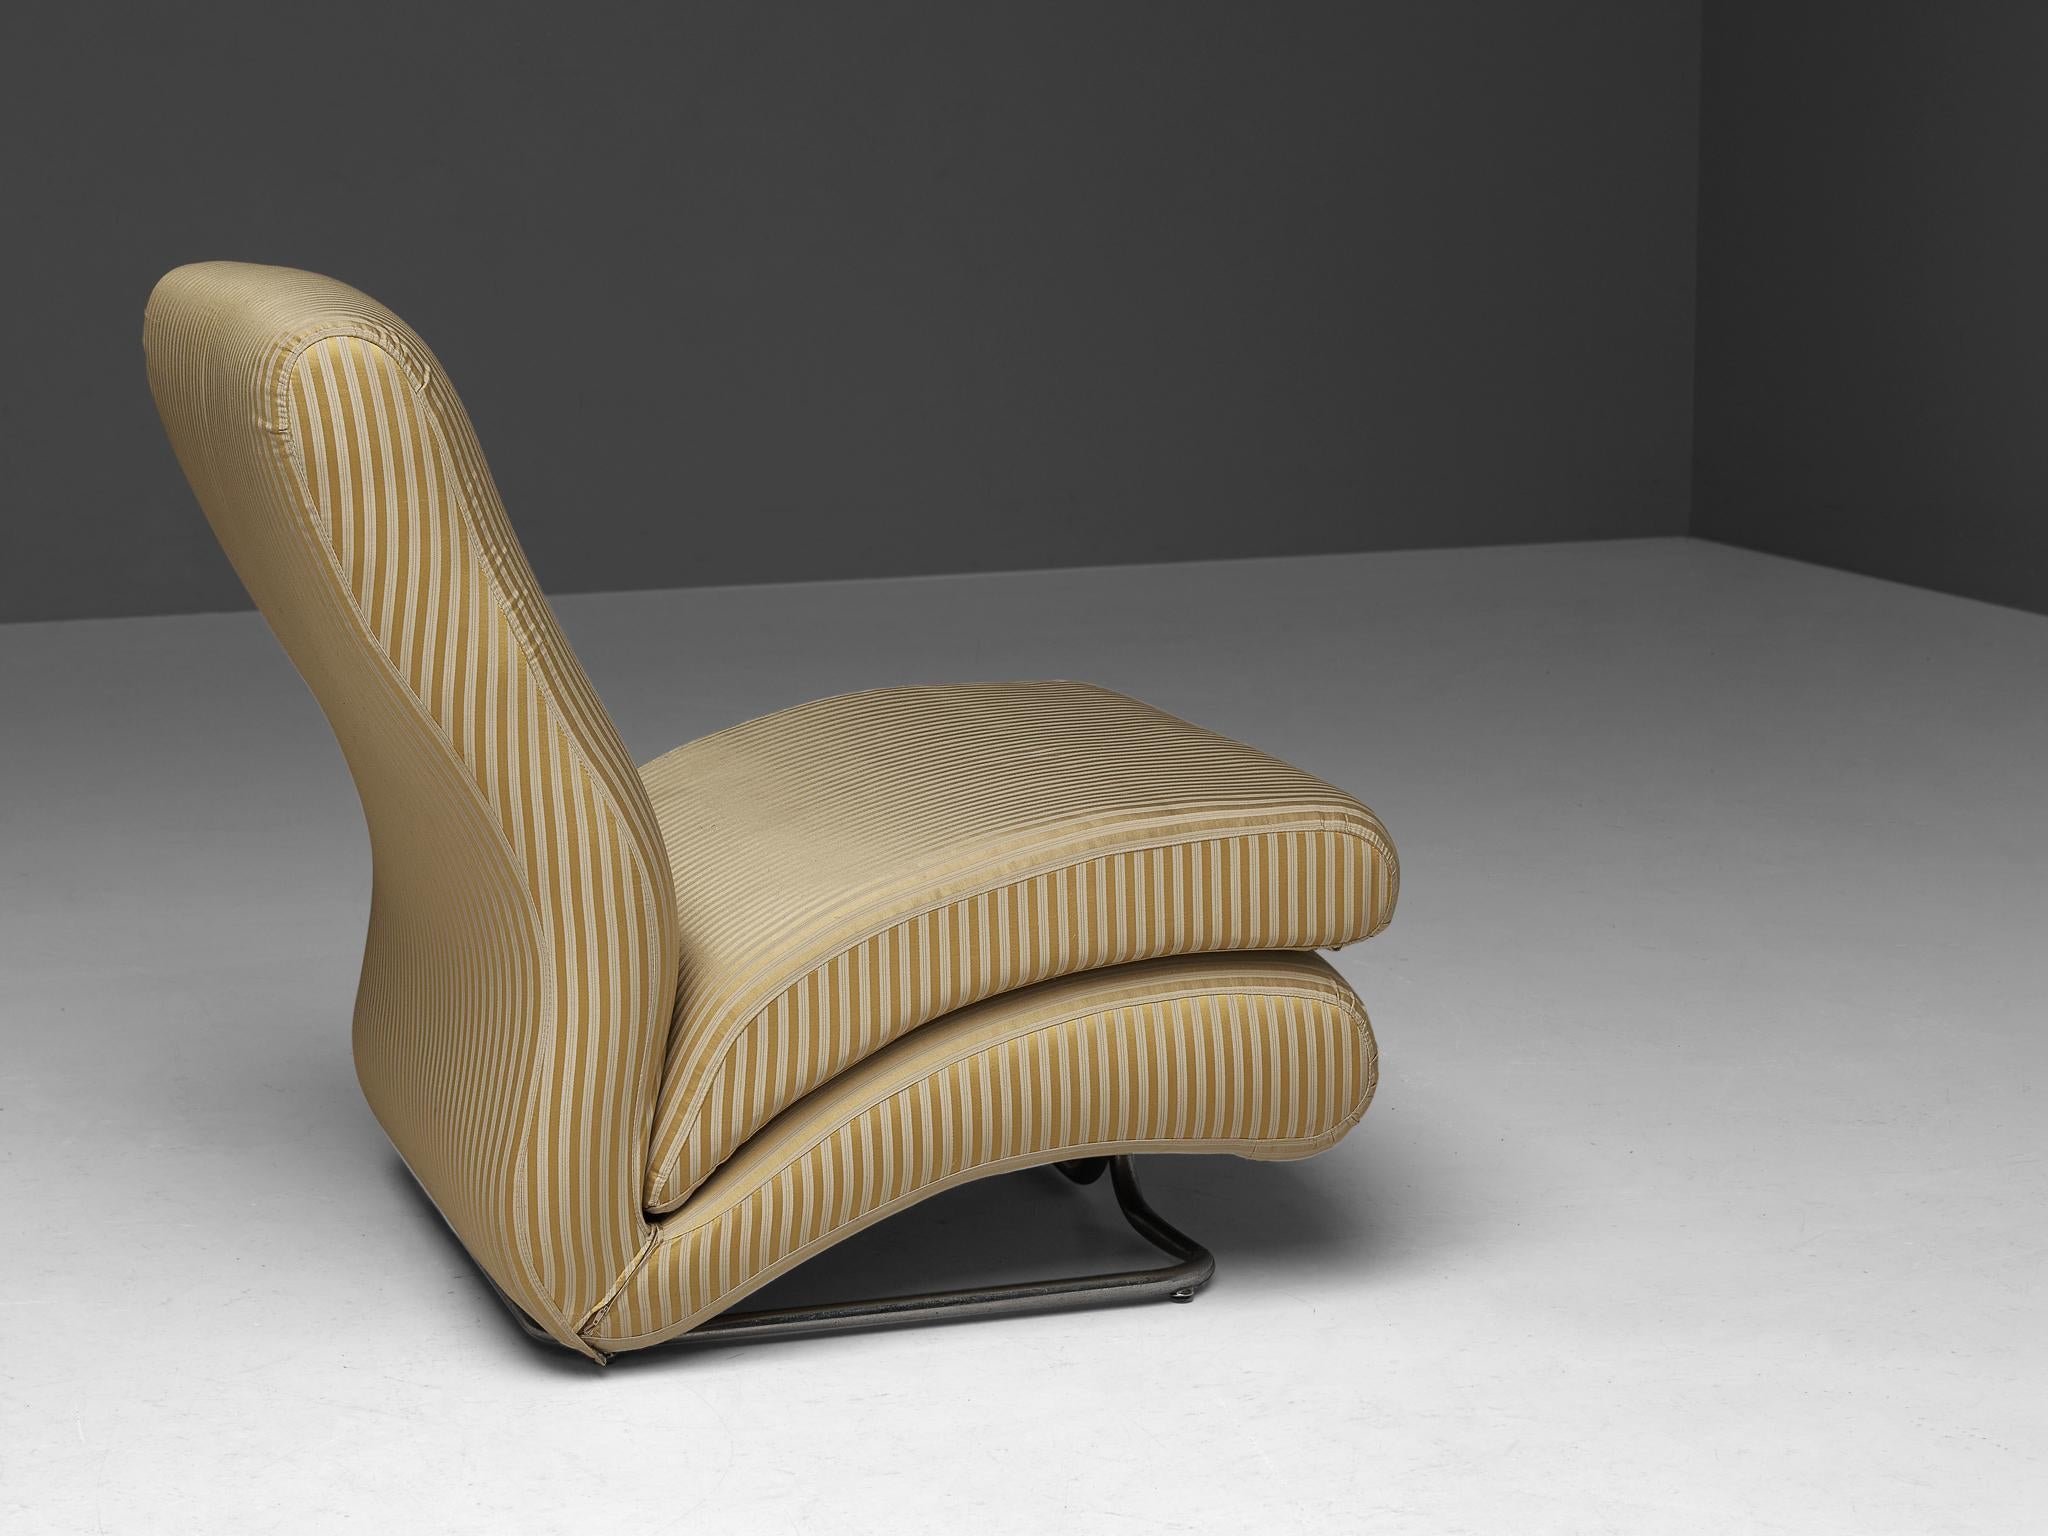 Vittorio Varo for I.P.E. 'Cigno' Lounge Chair in Striped Upholstery